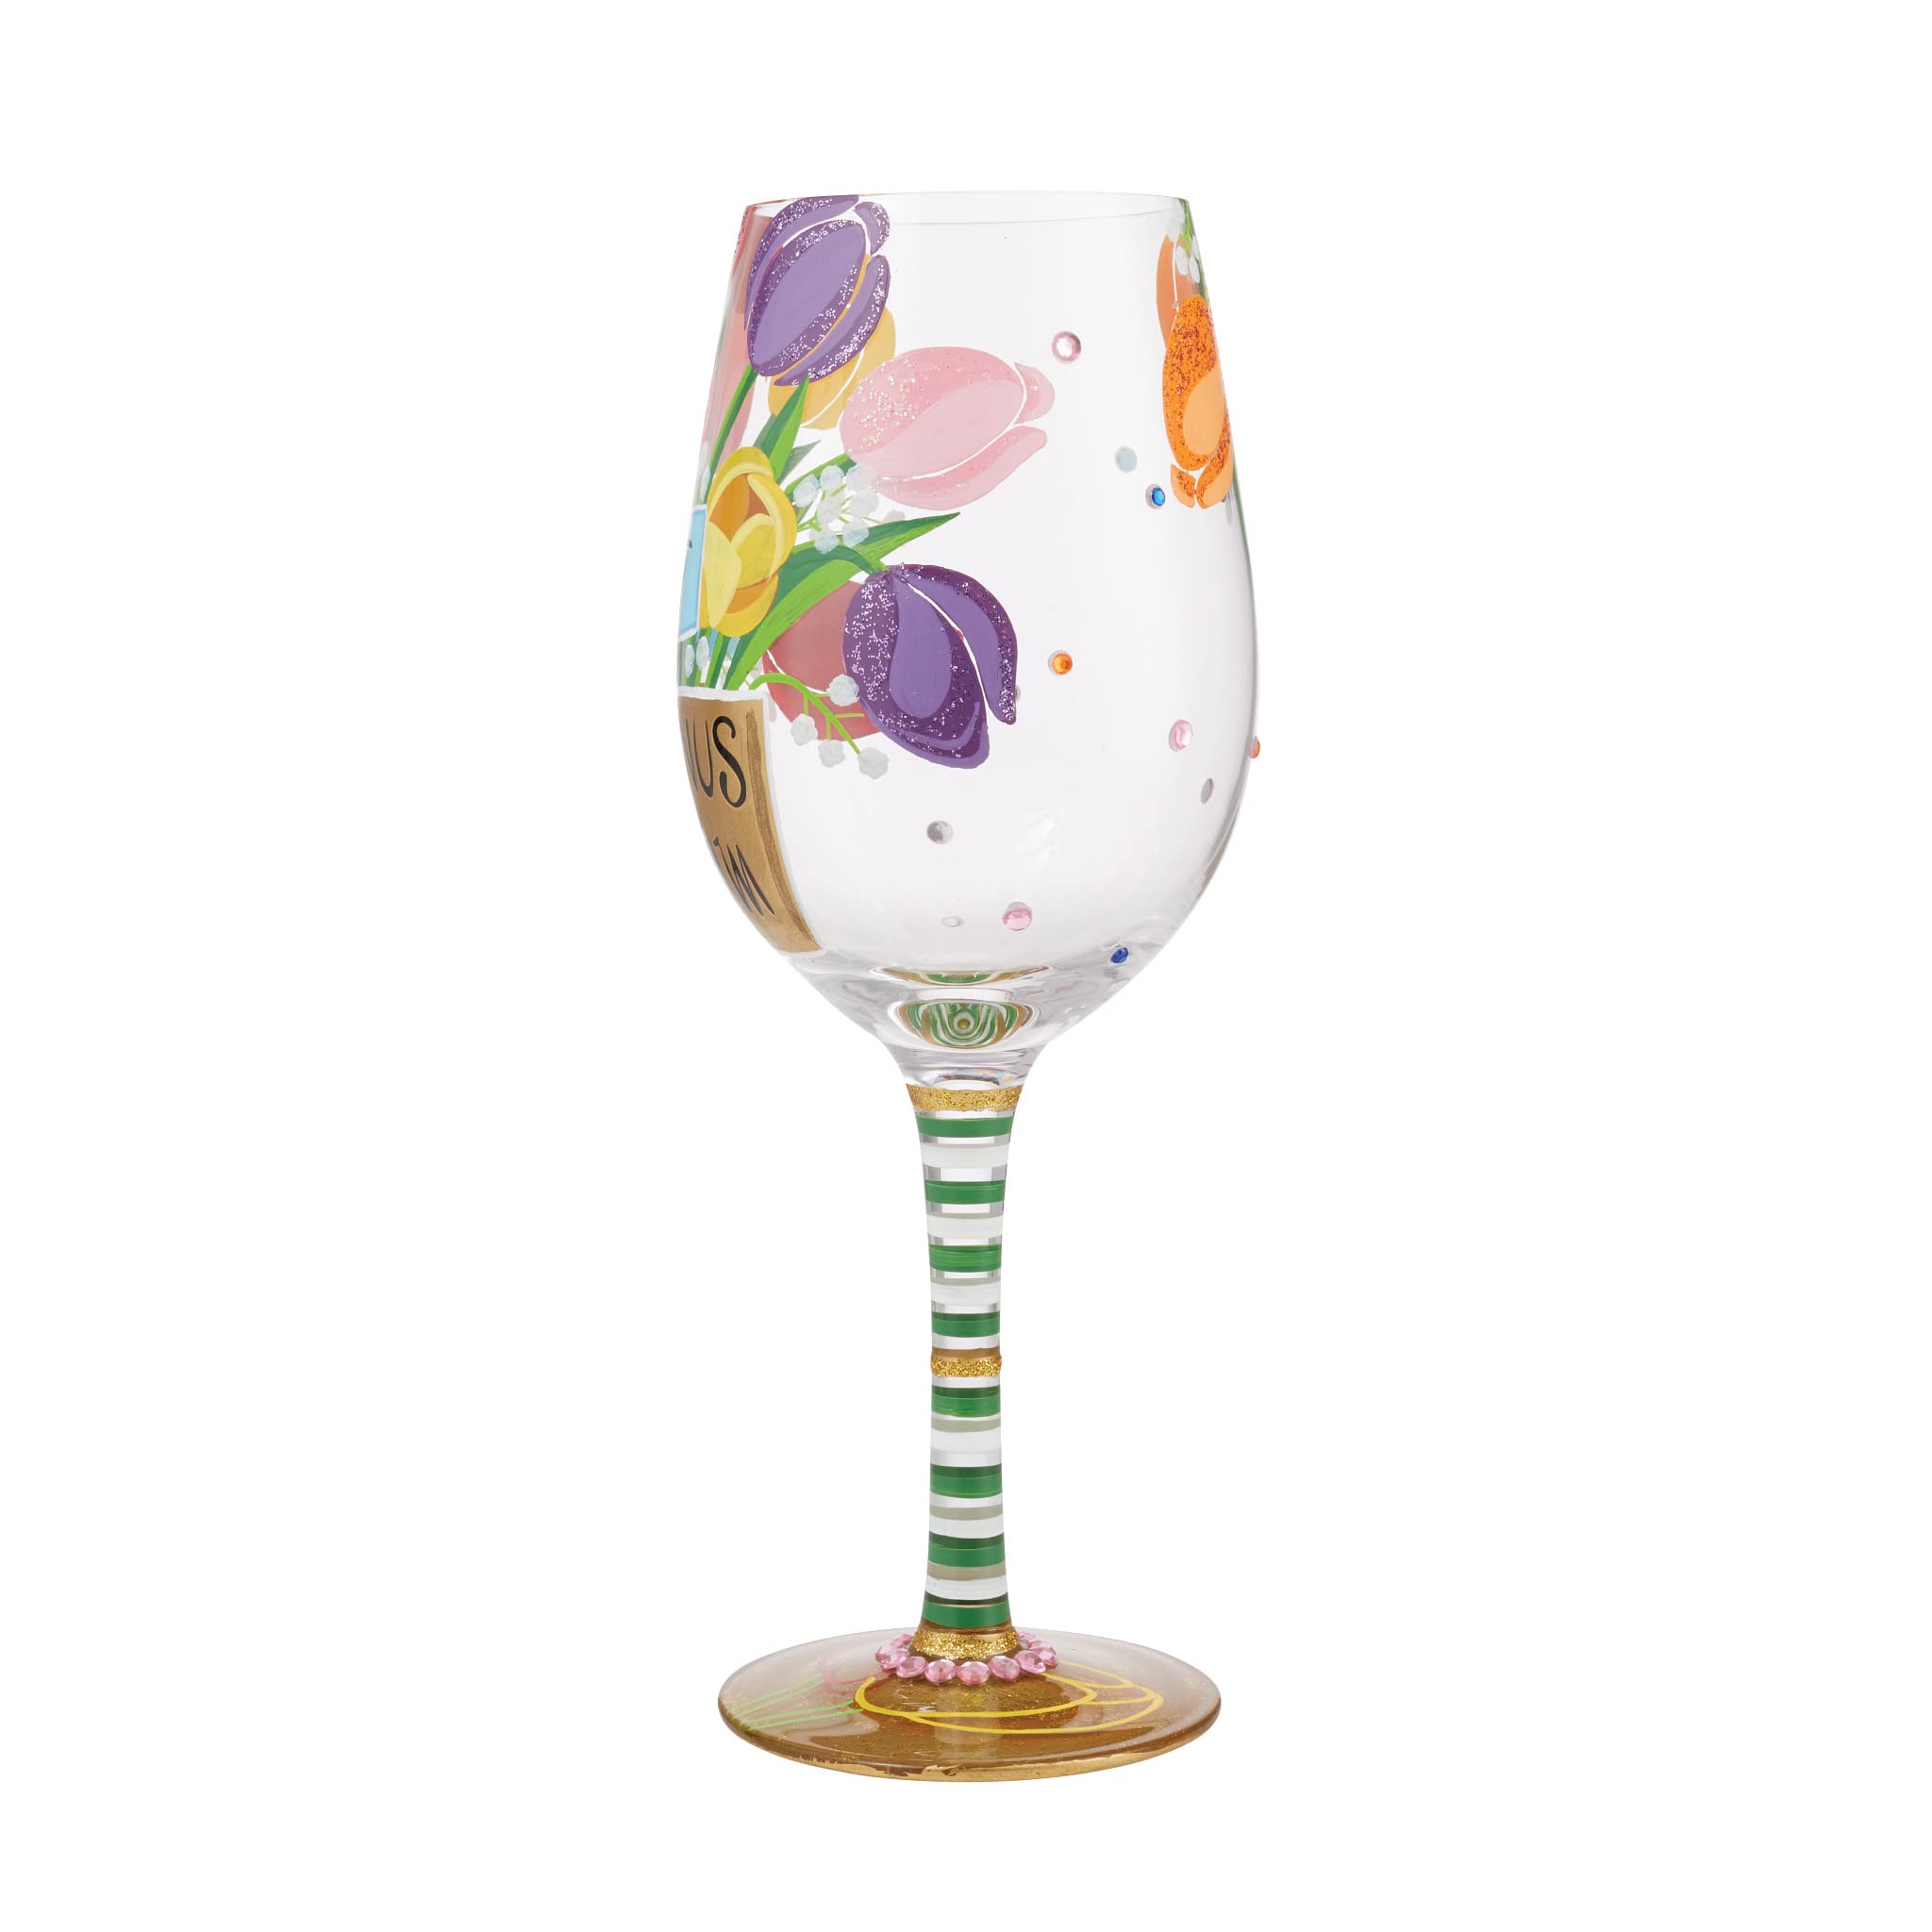 Enesco Designs by Lolita Best Bonus Mom Hand-Painted Artisan Wine Glass, 15 Ounce, Multicolor